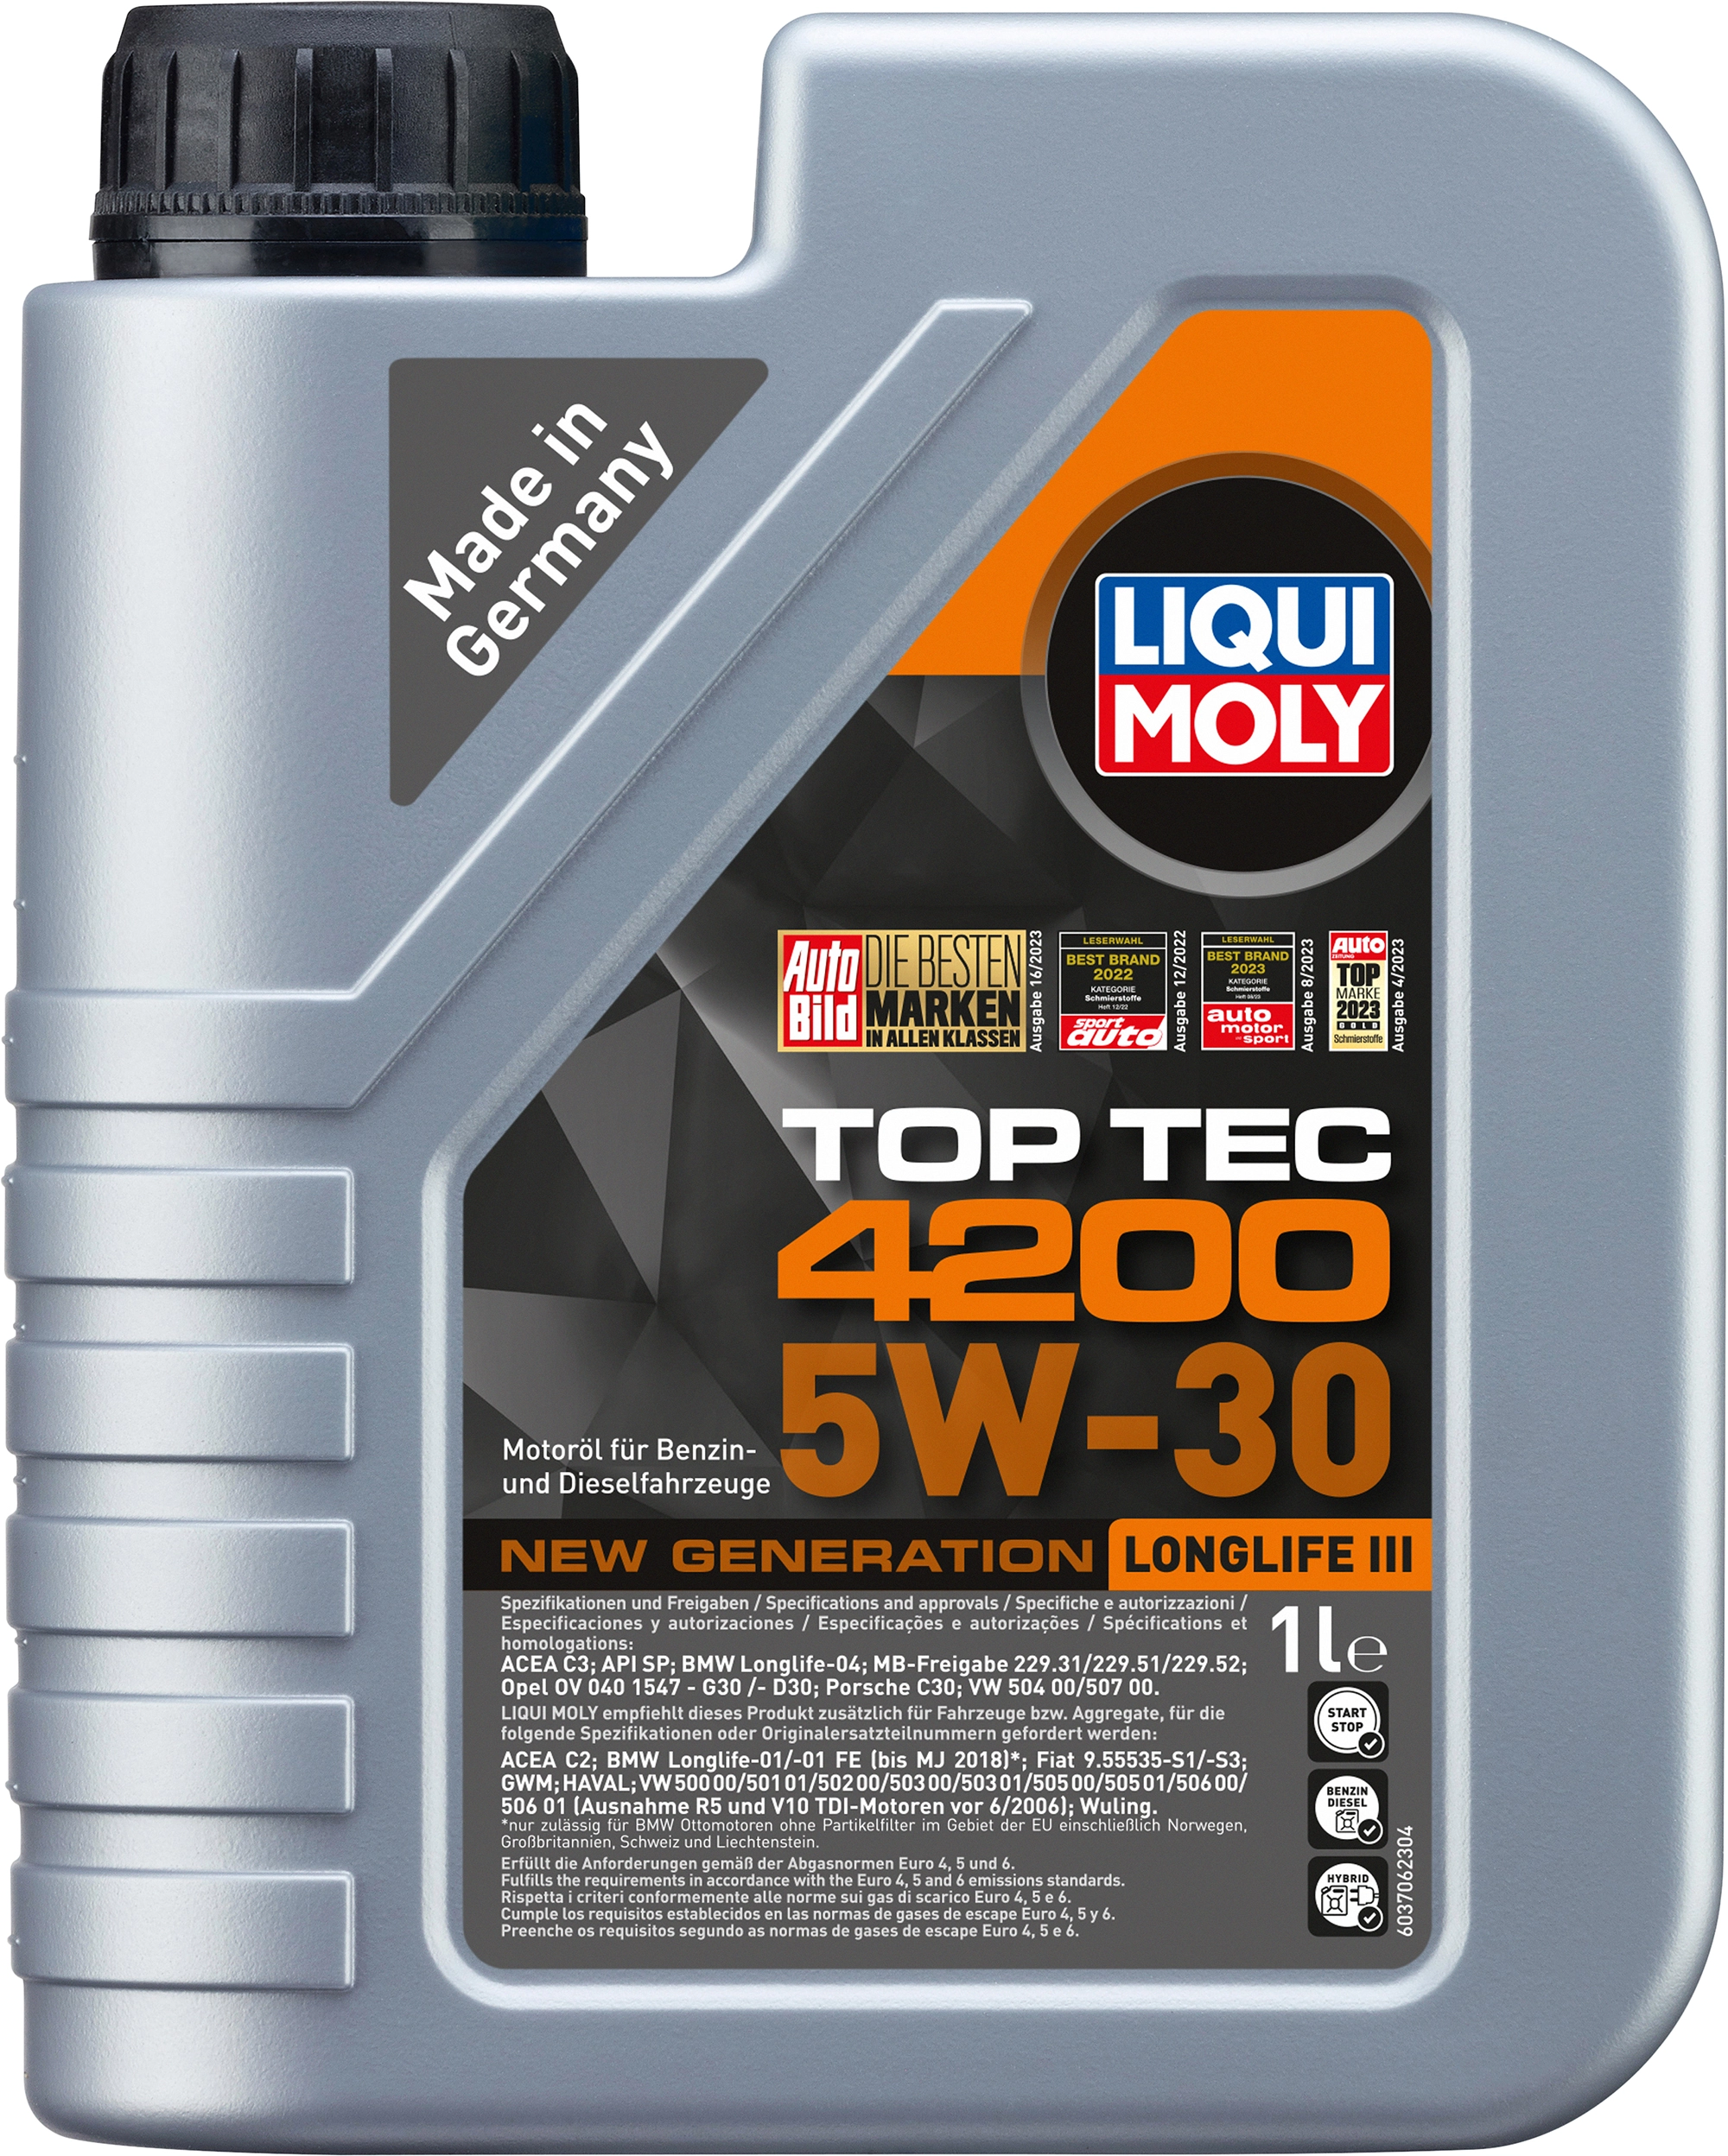 Liqui Moly Top Tec 4200 5w-30 - Liqui Moly - Ölanalysen und